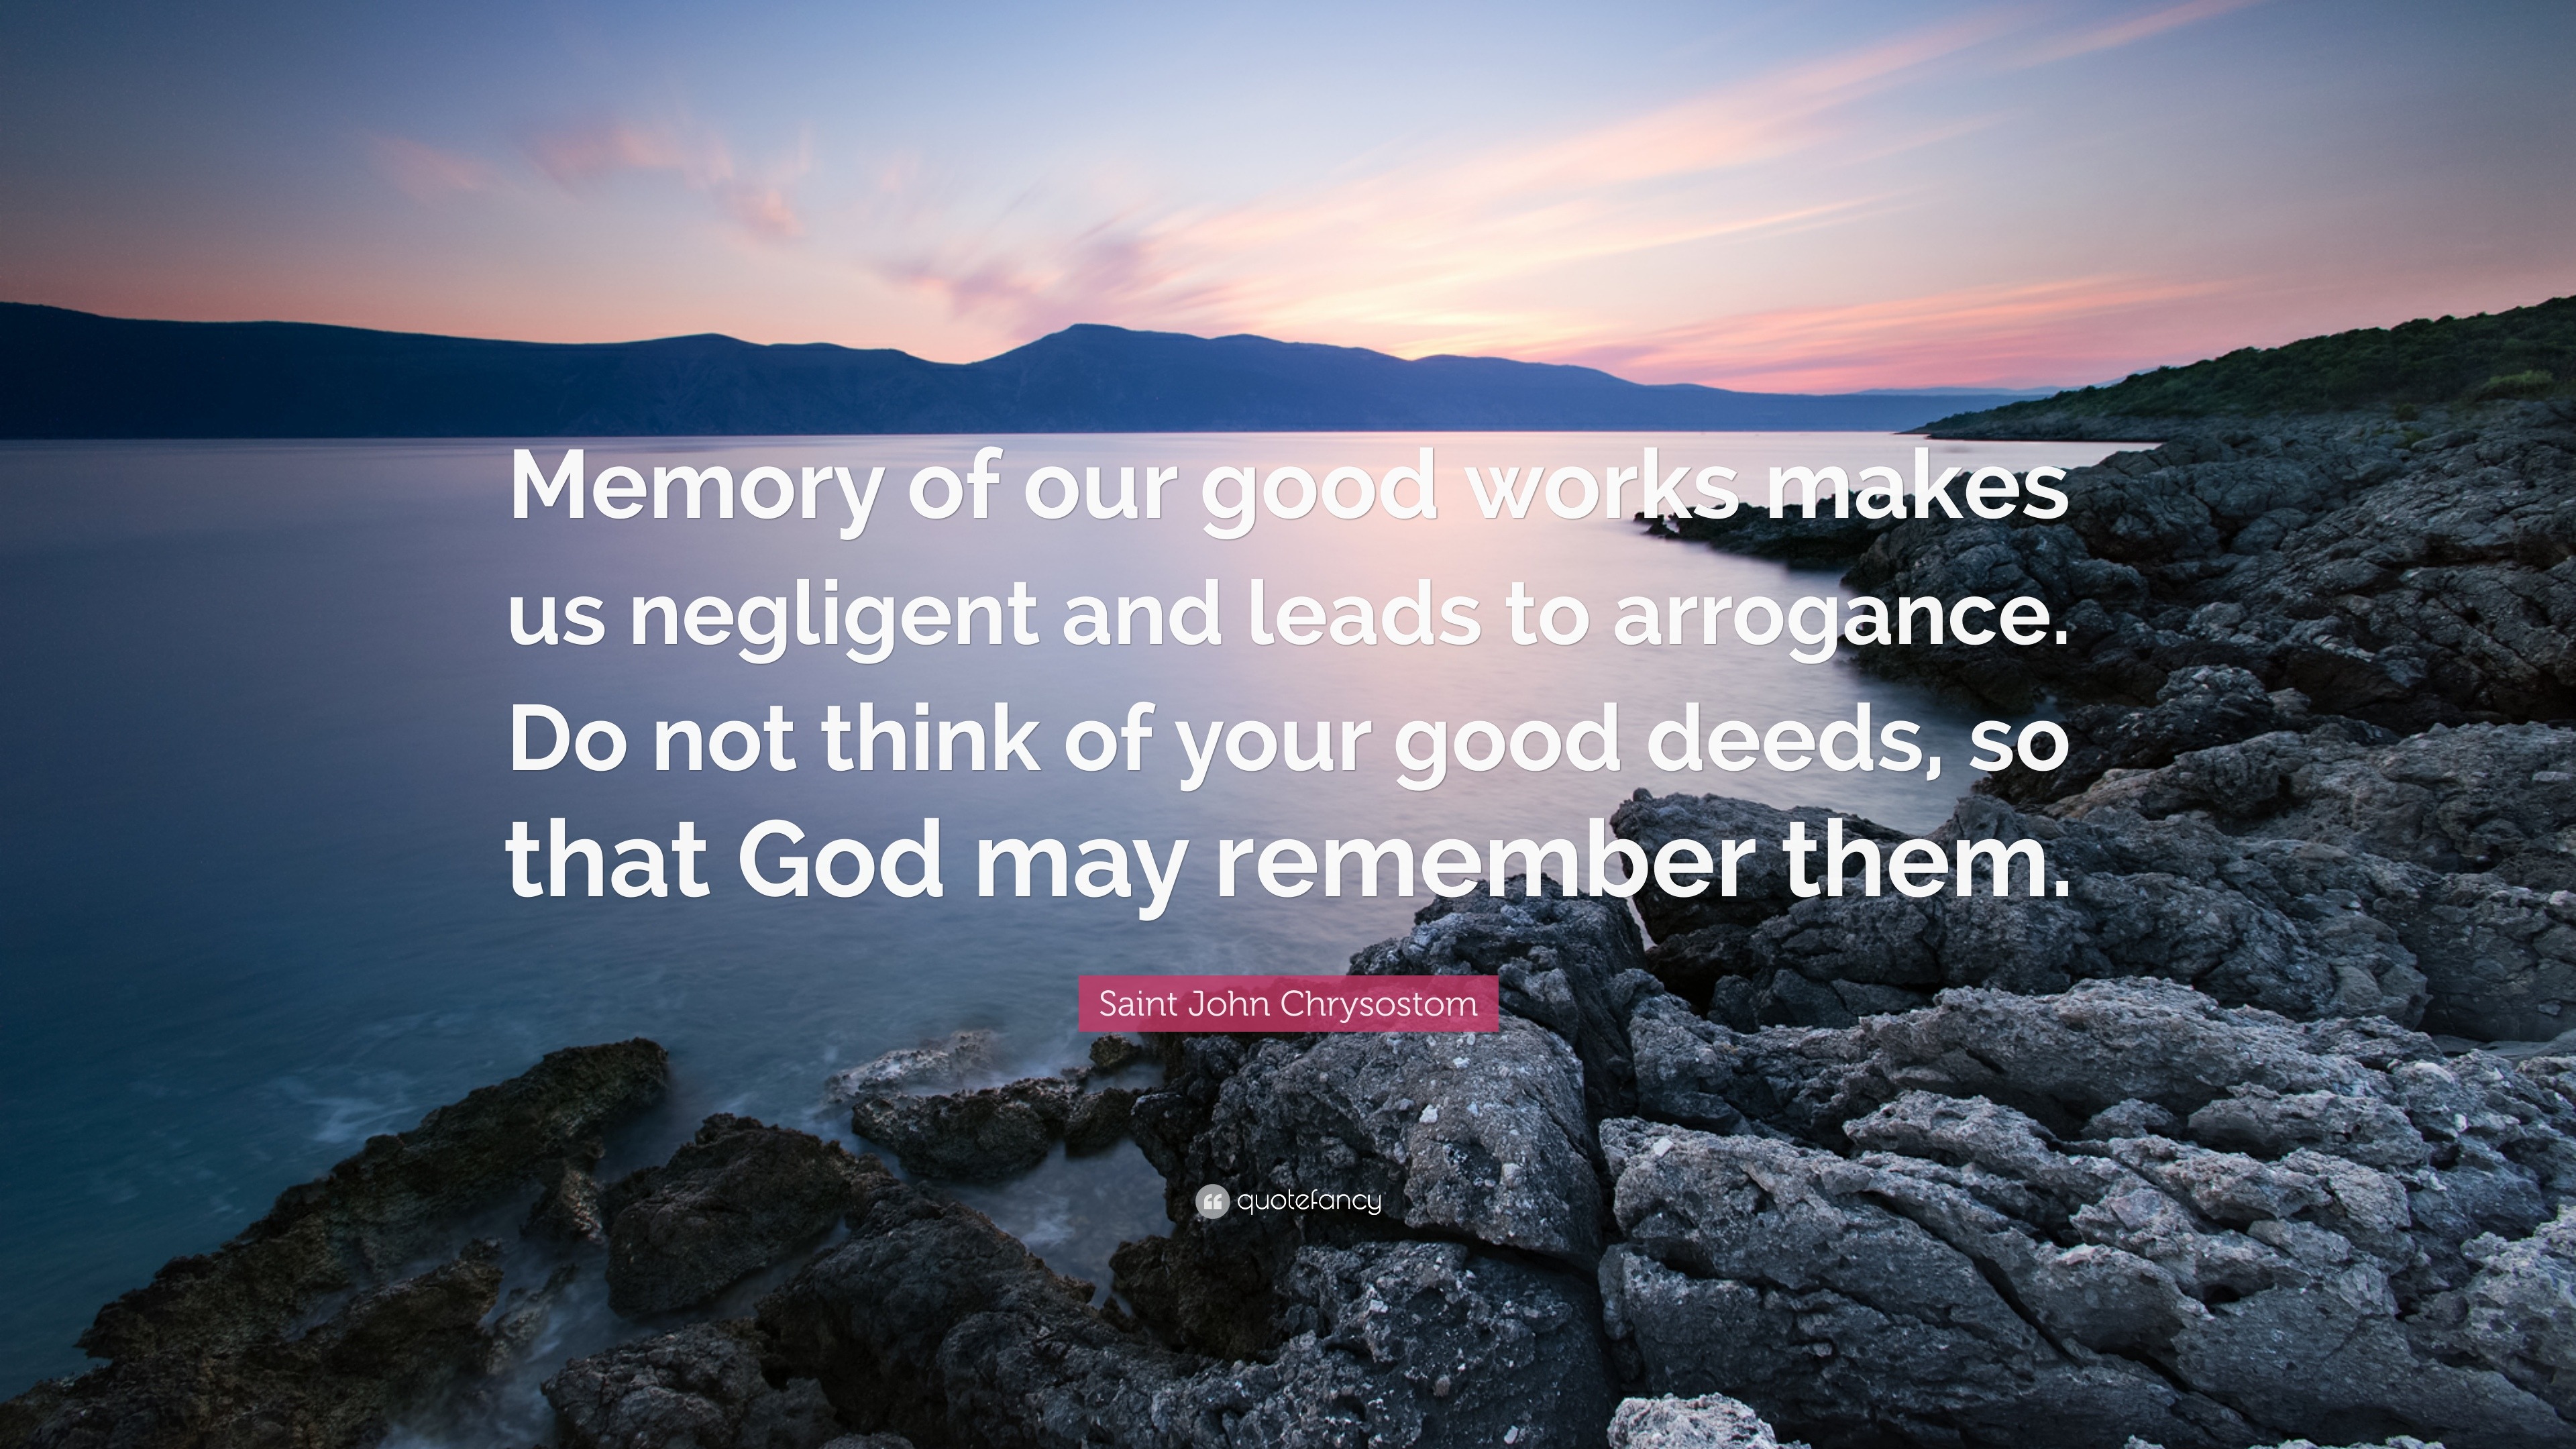 Saint John Chrysostom Quote: “Memory of our good works makes us